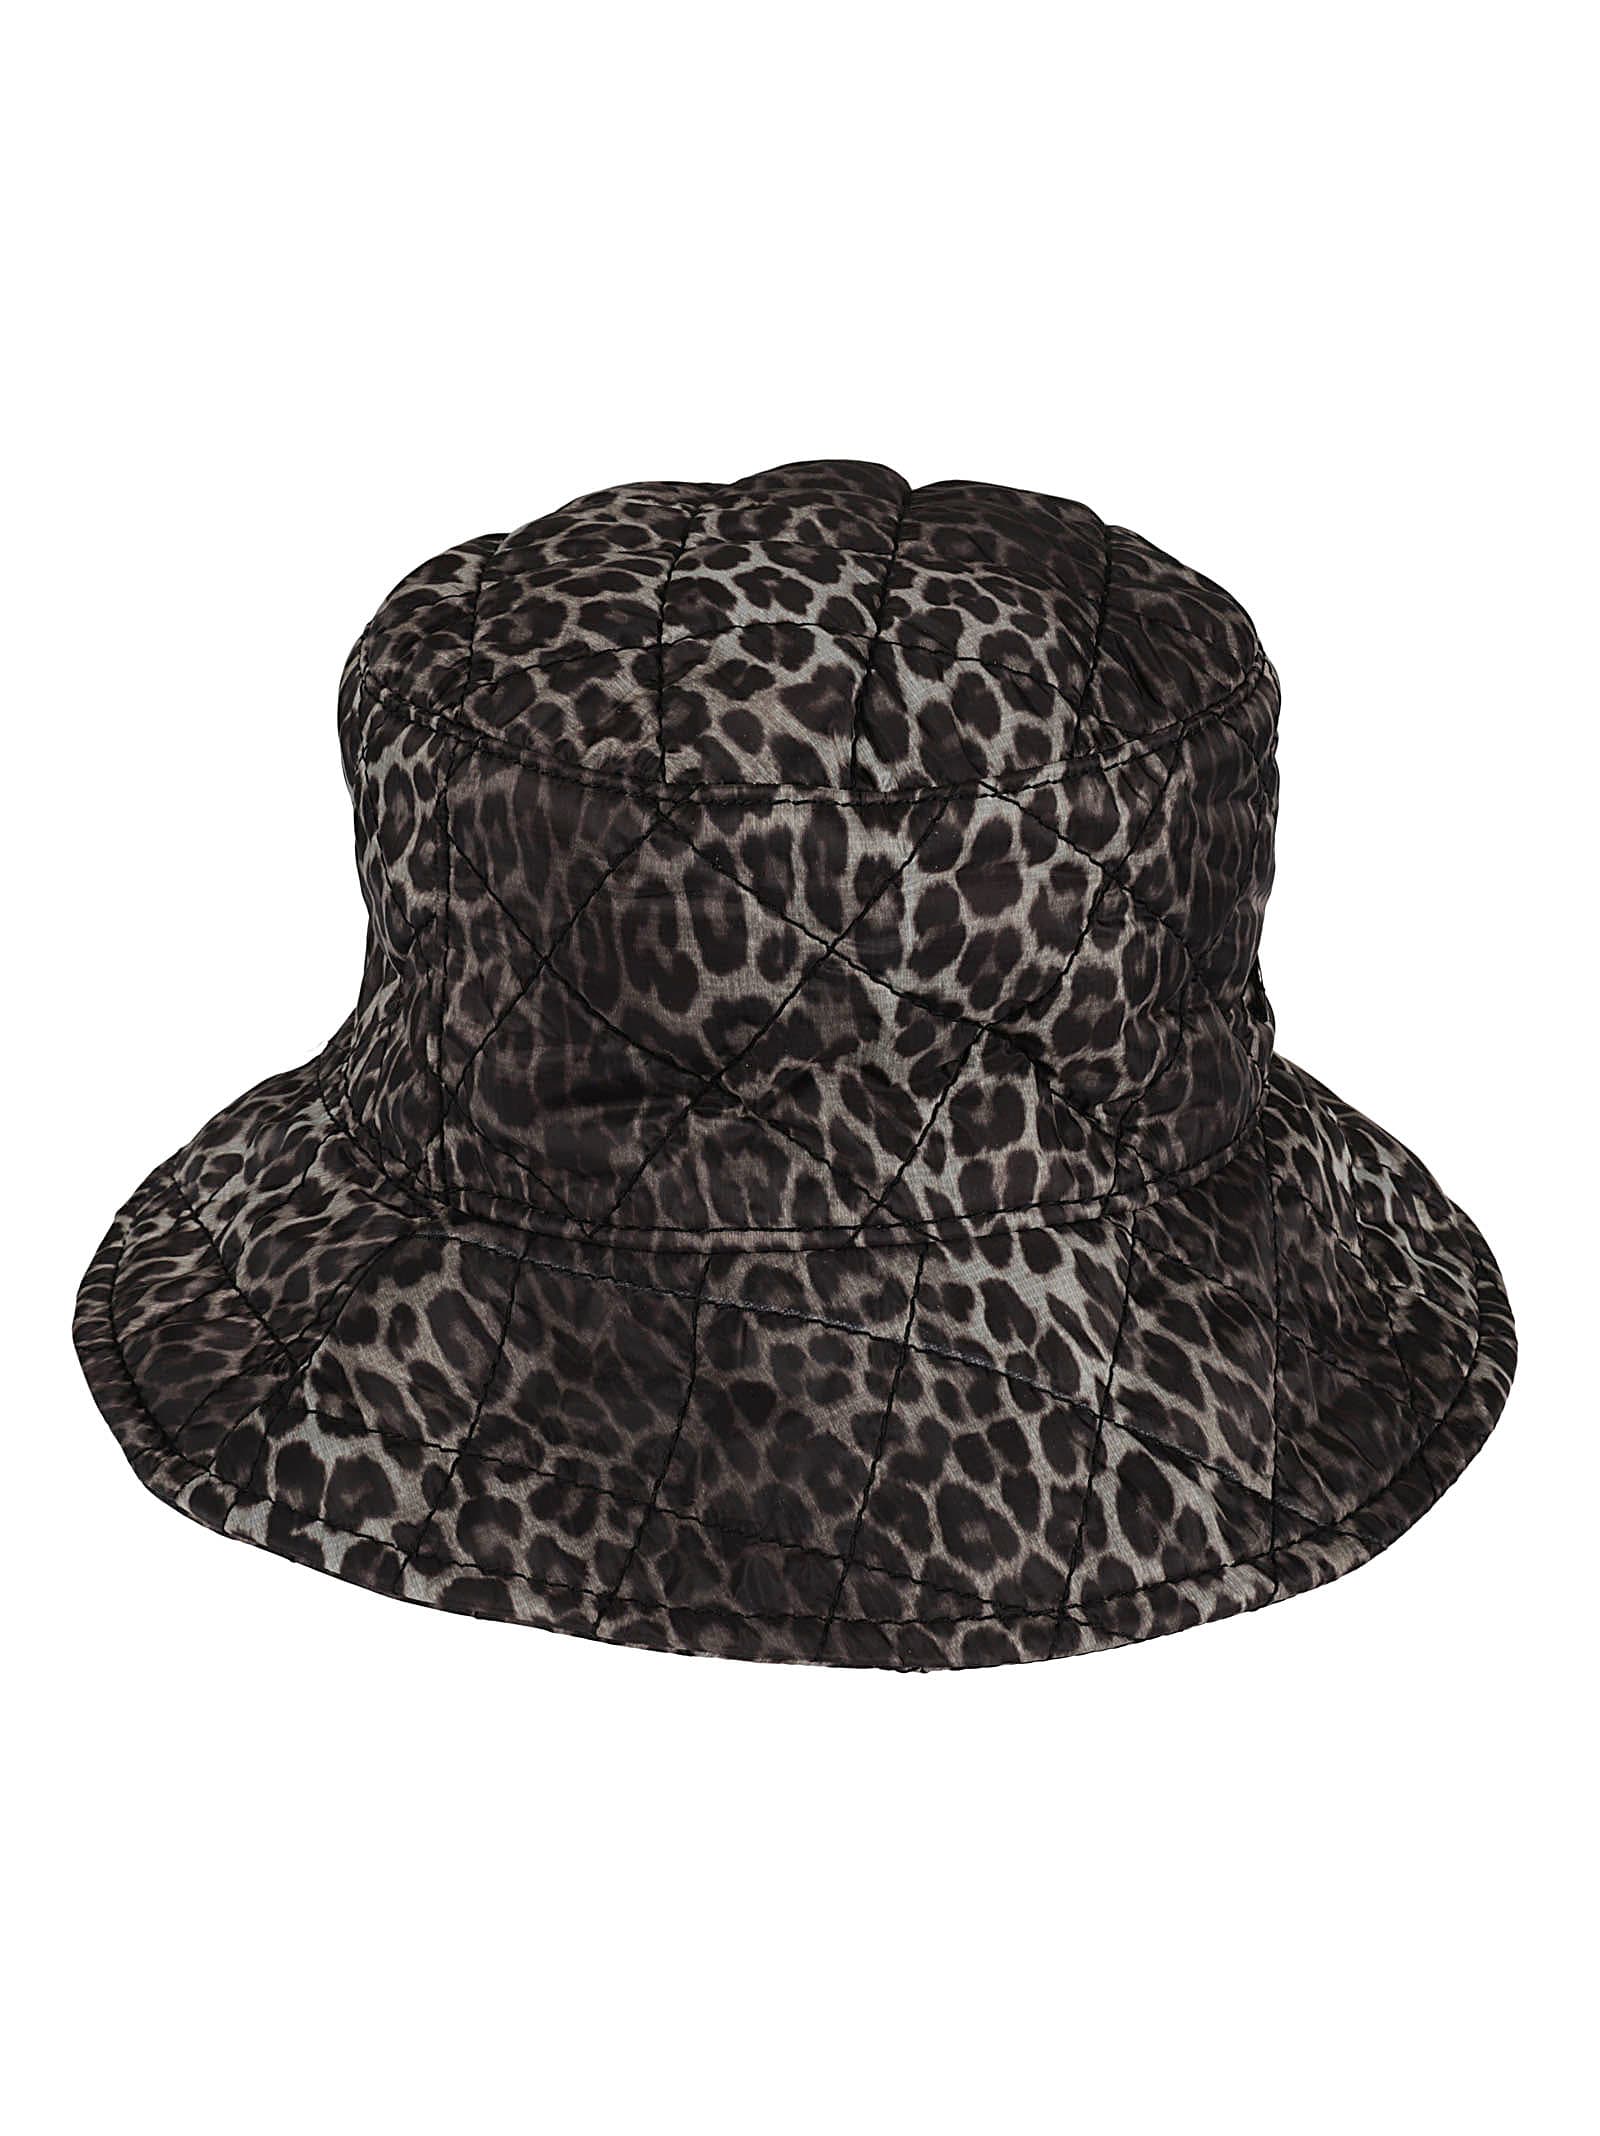 Maison Michel Leopard Print Quilted Bucket Hat